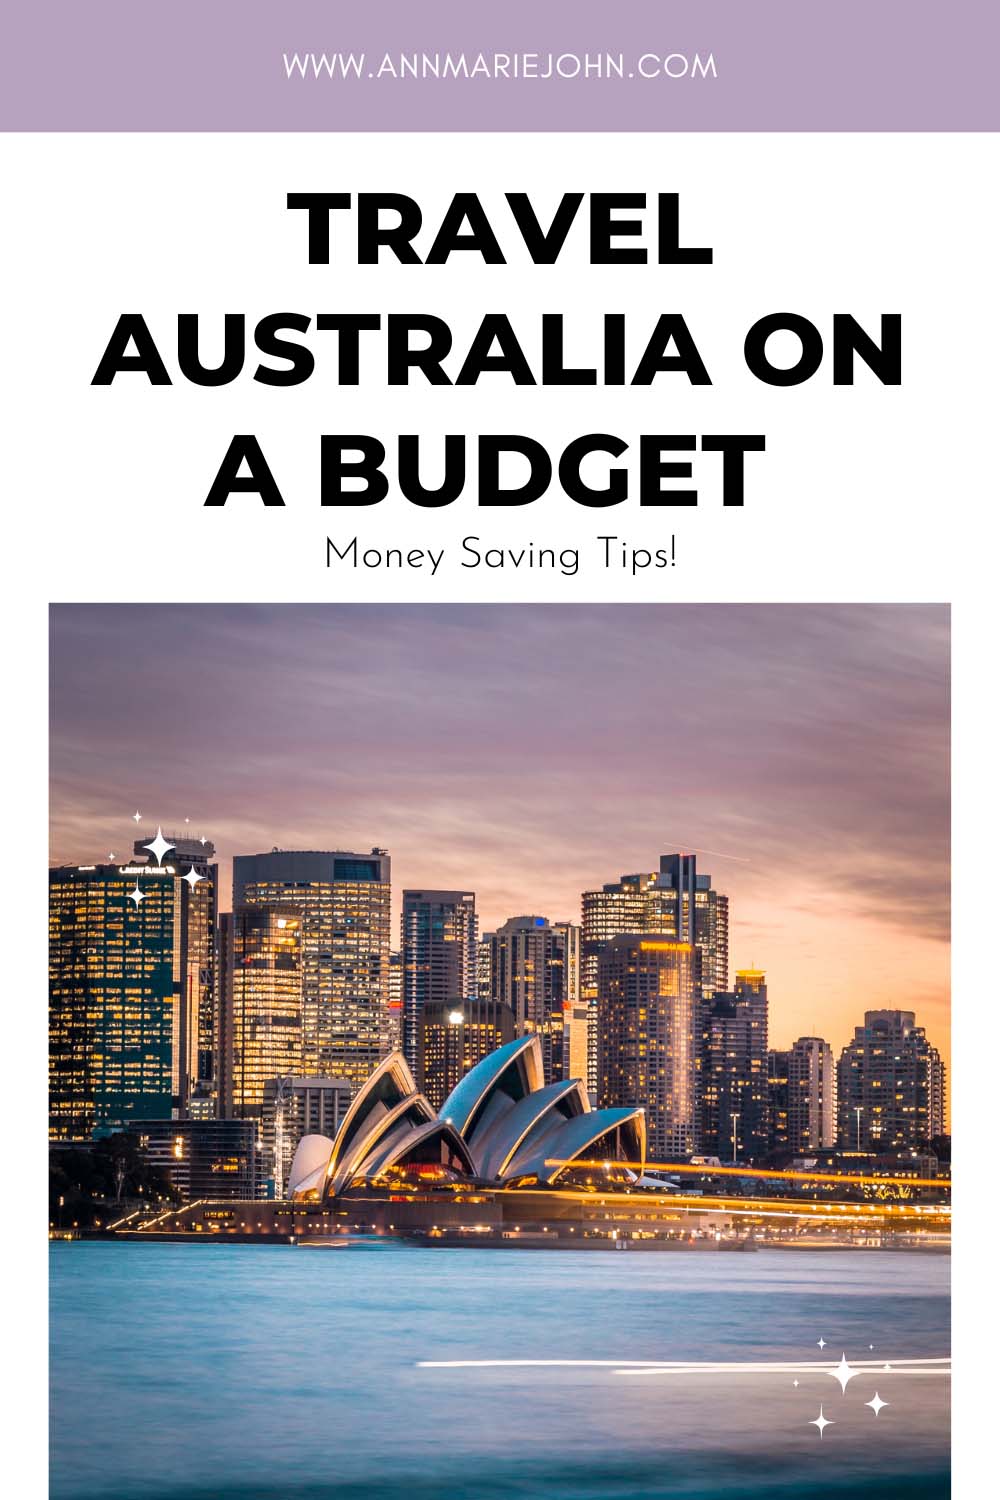 Travel Australia on a Budget